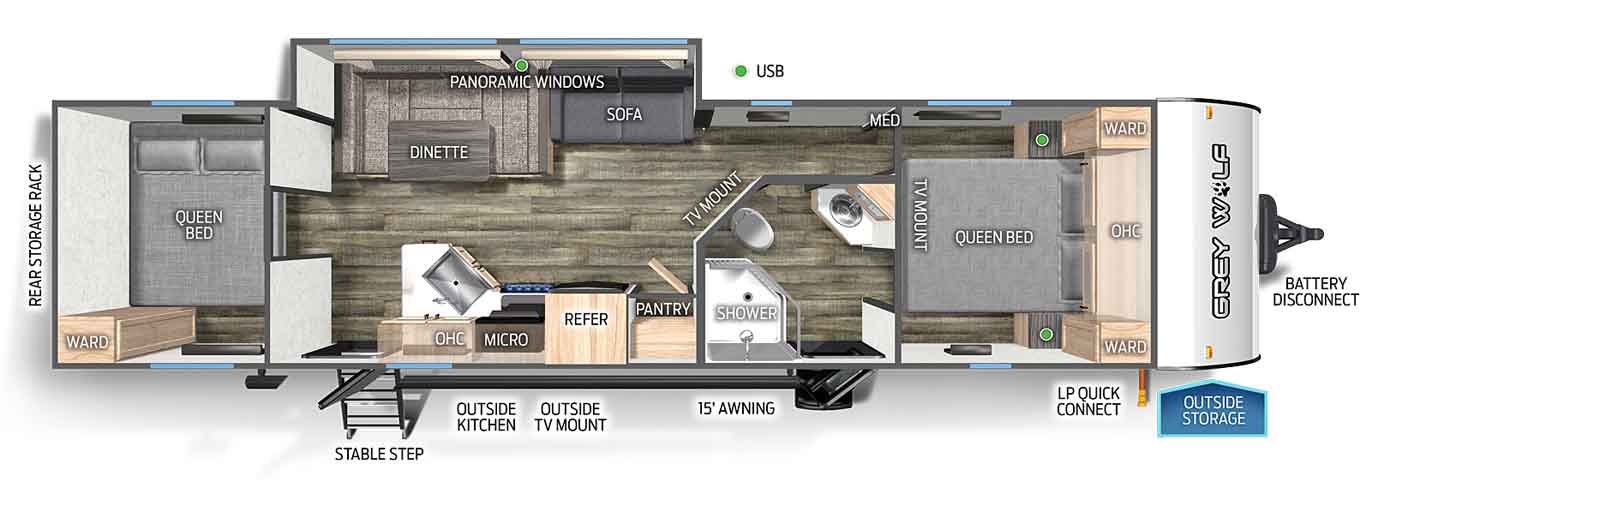 29QBBL Floorplan Image